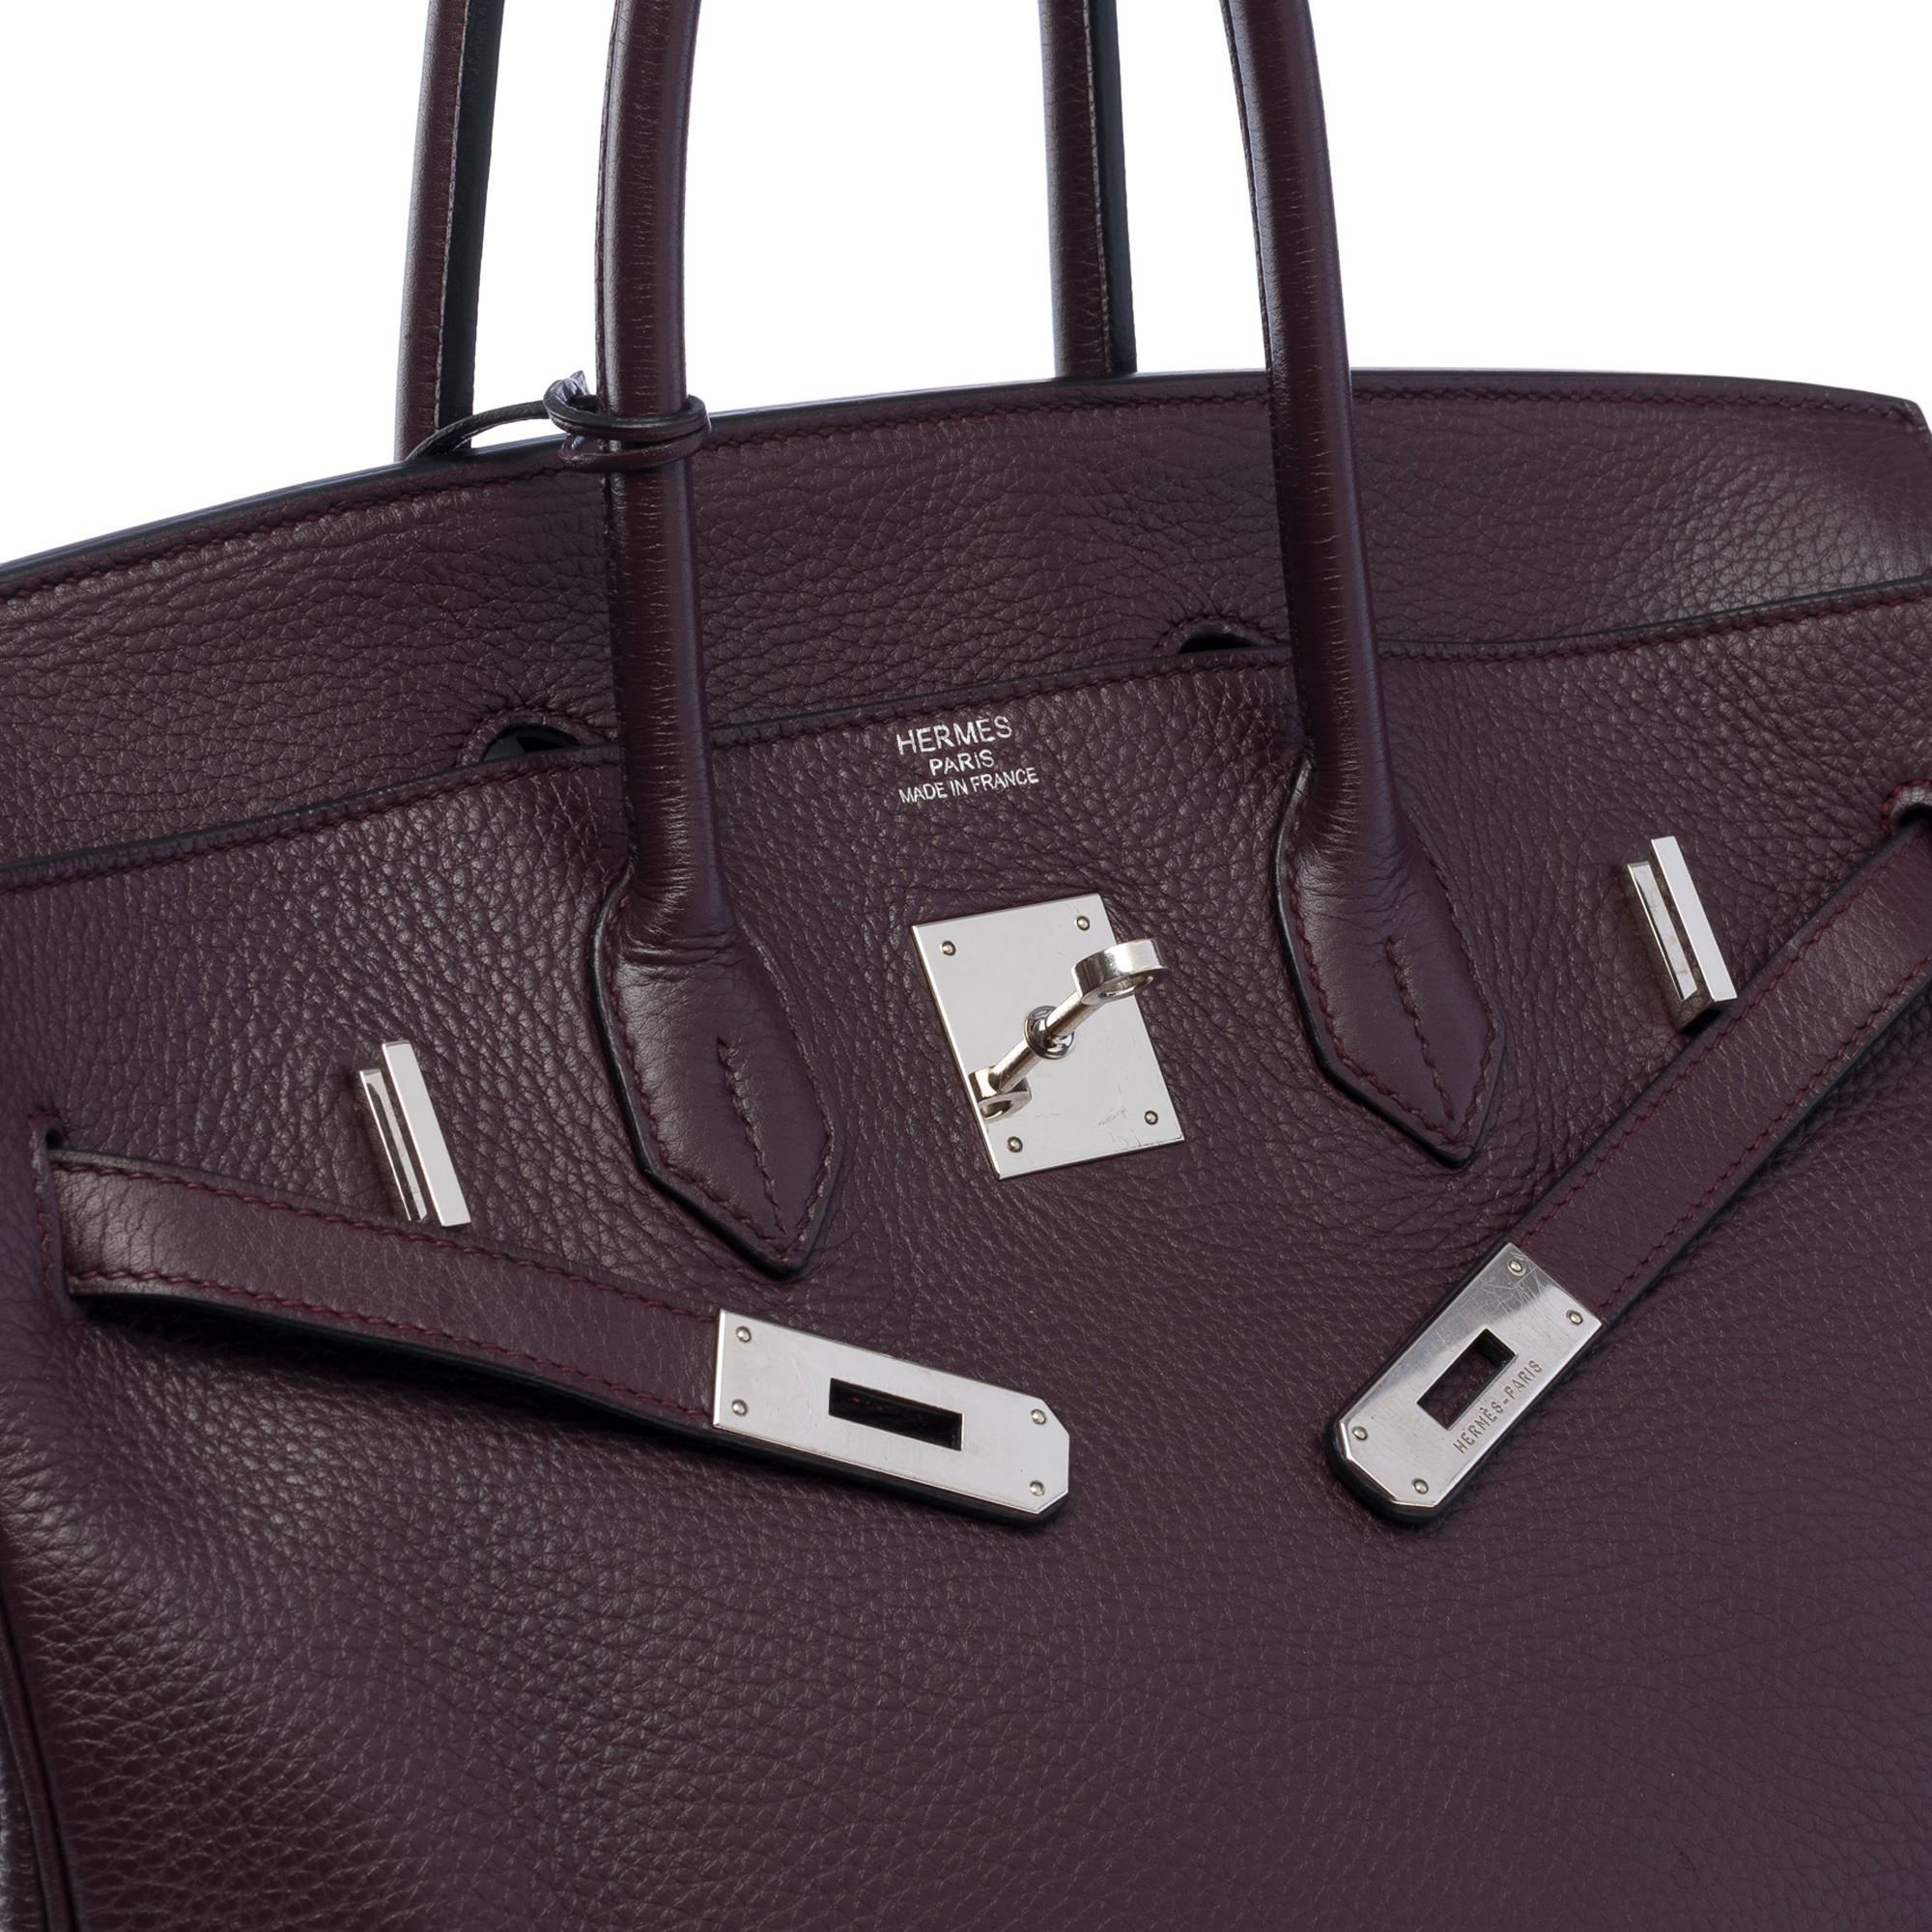 Amazing Hermès Birkin 35 handbag in Togo Raisin leather, SHW For Sale 2